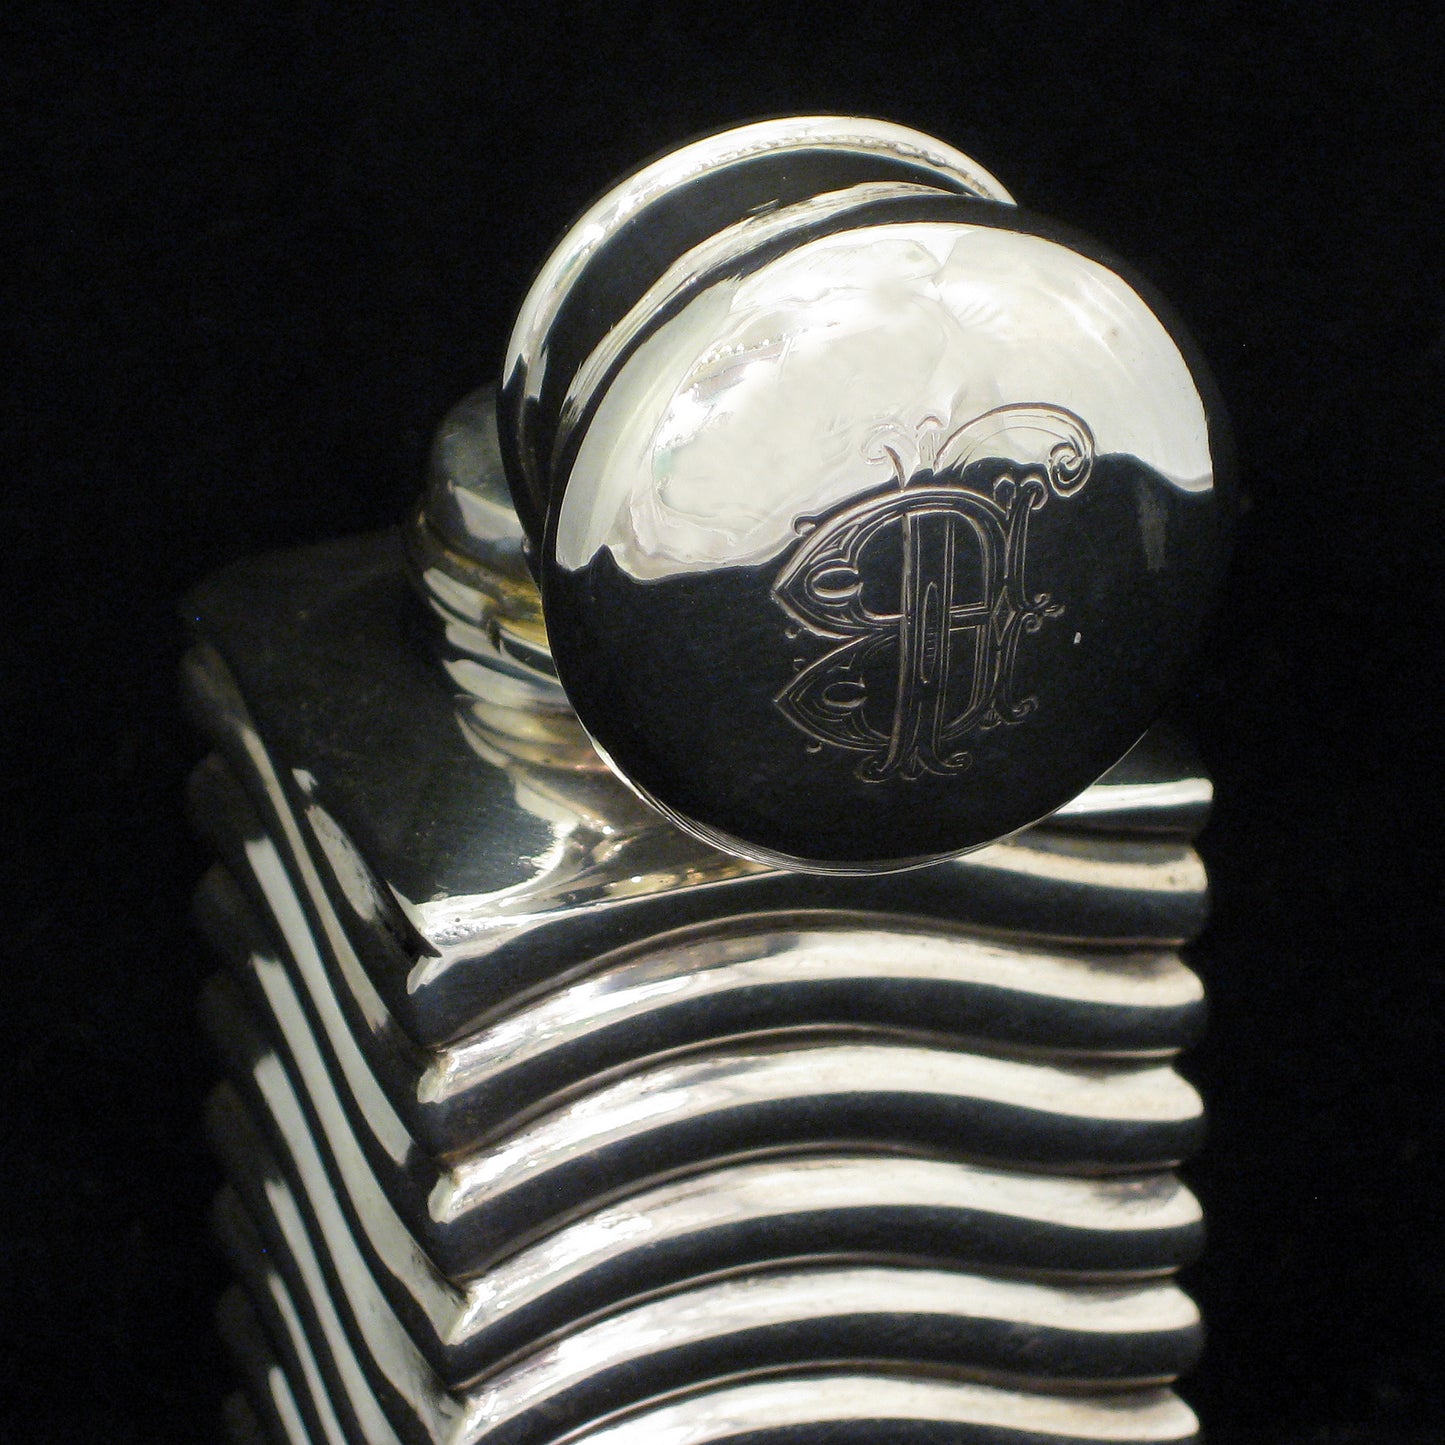 A rare unusually shaped silver perfume bottle